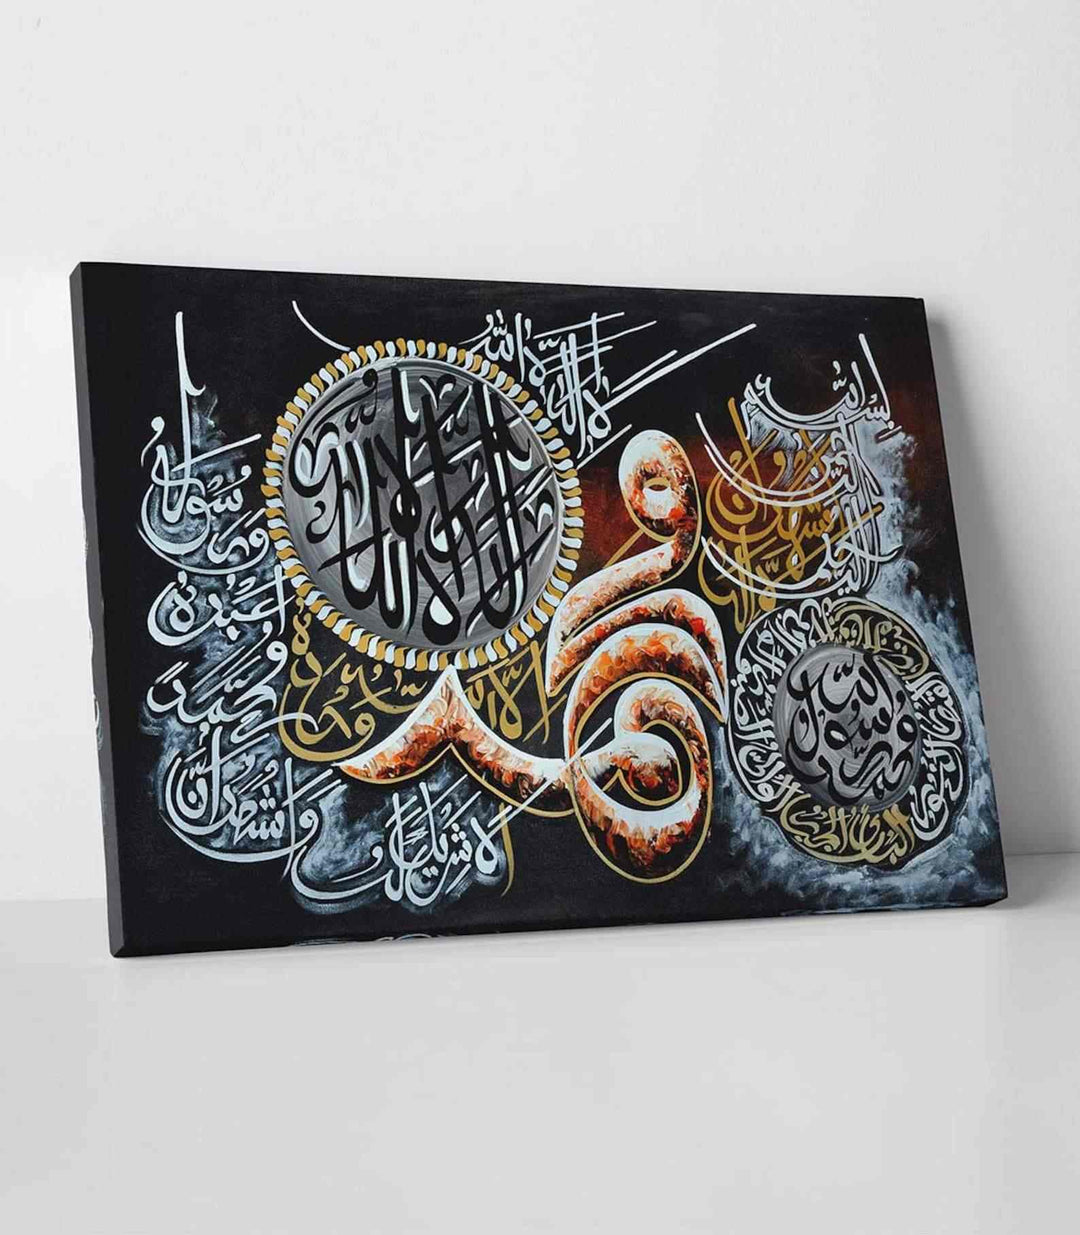 Shahadah Second Kalimah Oil Paint Reproduction Canvas Print Islamic Wall Art - Islamic Wall Art Store